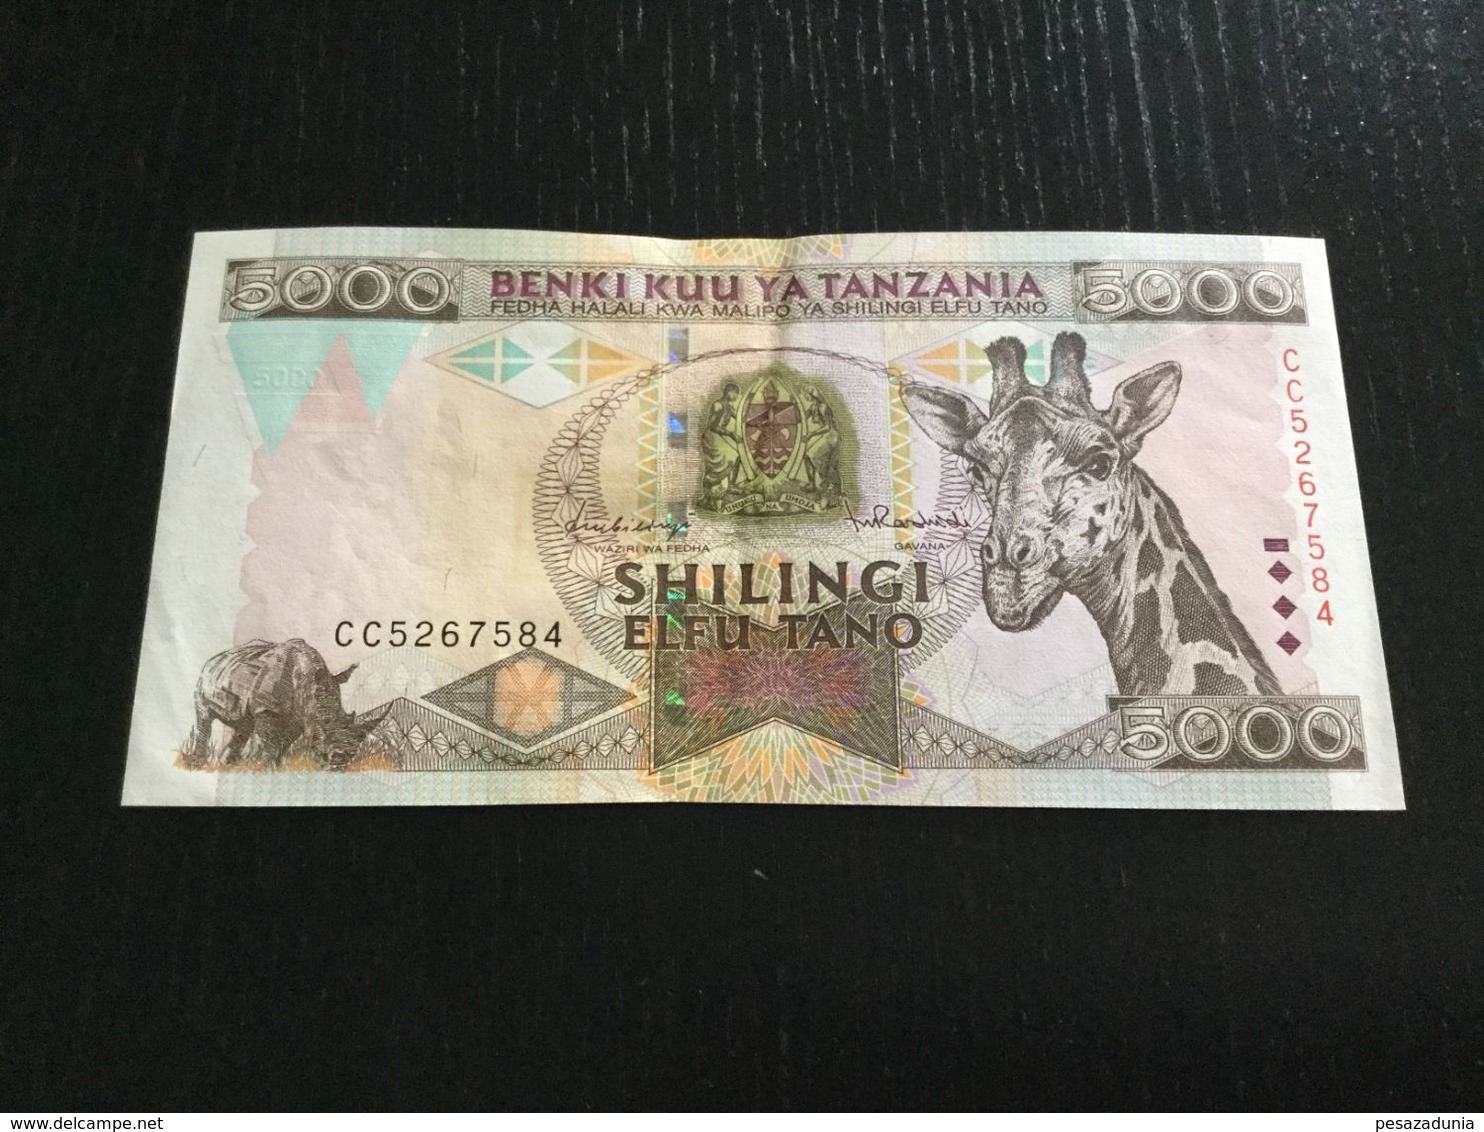 TANZANIA 5000 SHILLINGS BANKNOTE (1997) P-32 Beautiful Banknote With Giraffes And Kilimanjaro! - Tansania